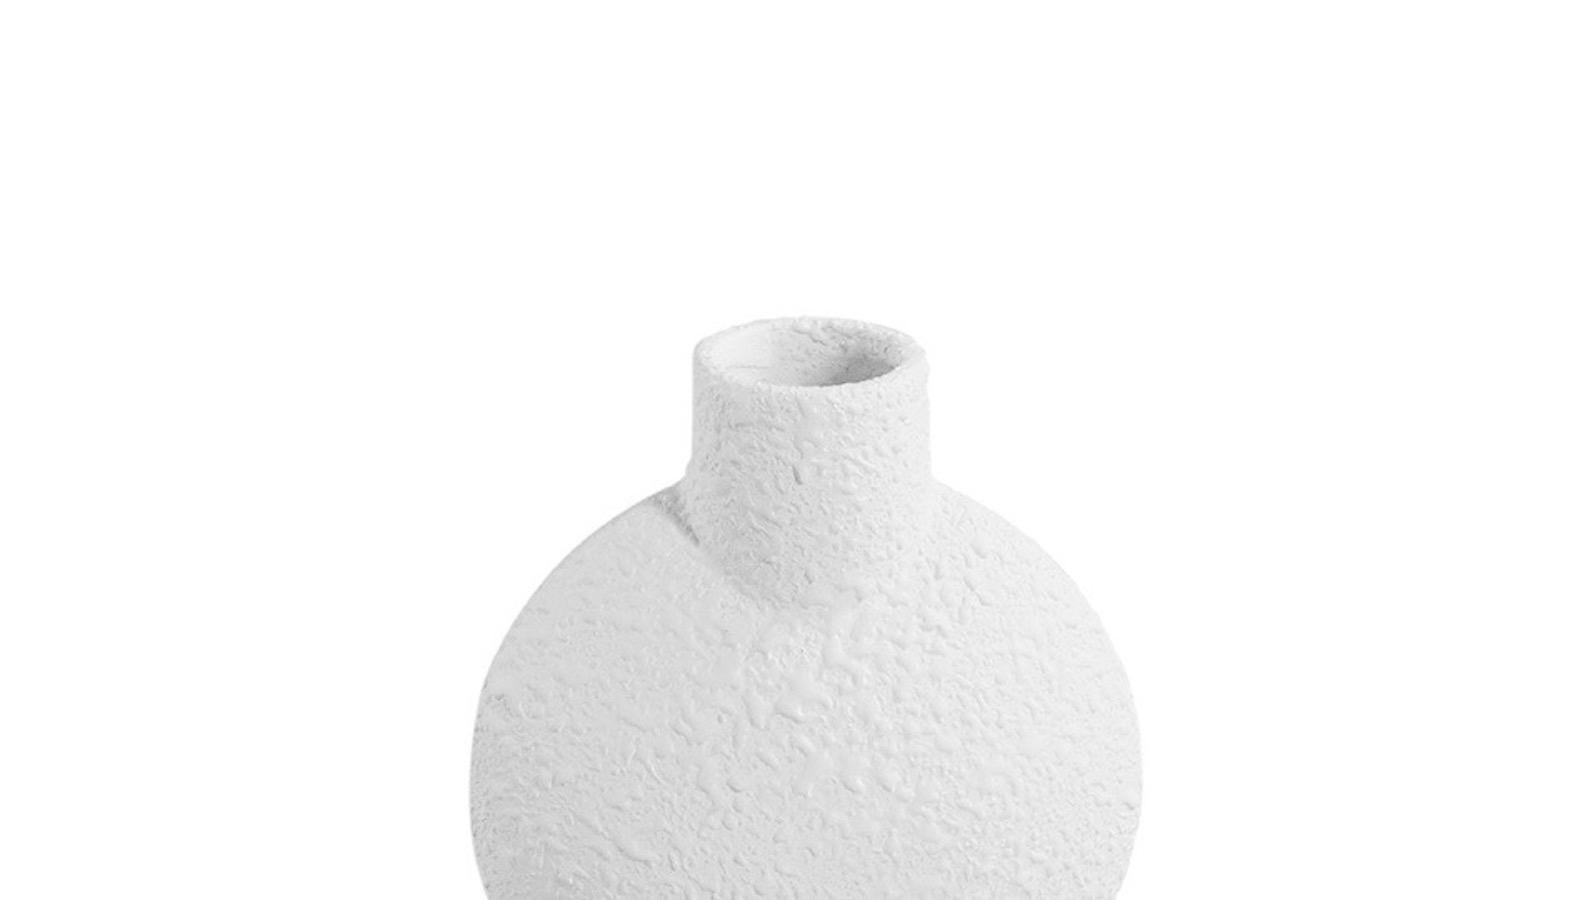 Contemporary Danish design textured white ceramic vase. 
Bubble shaped top with single tubular spout.
Single tubular shaped base.
ARRIVING NOVEMBER

   